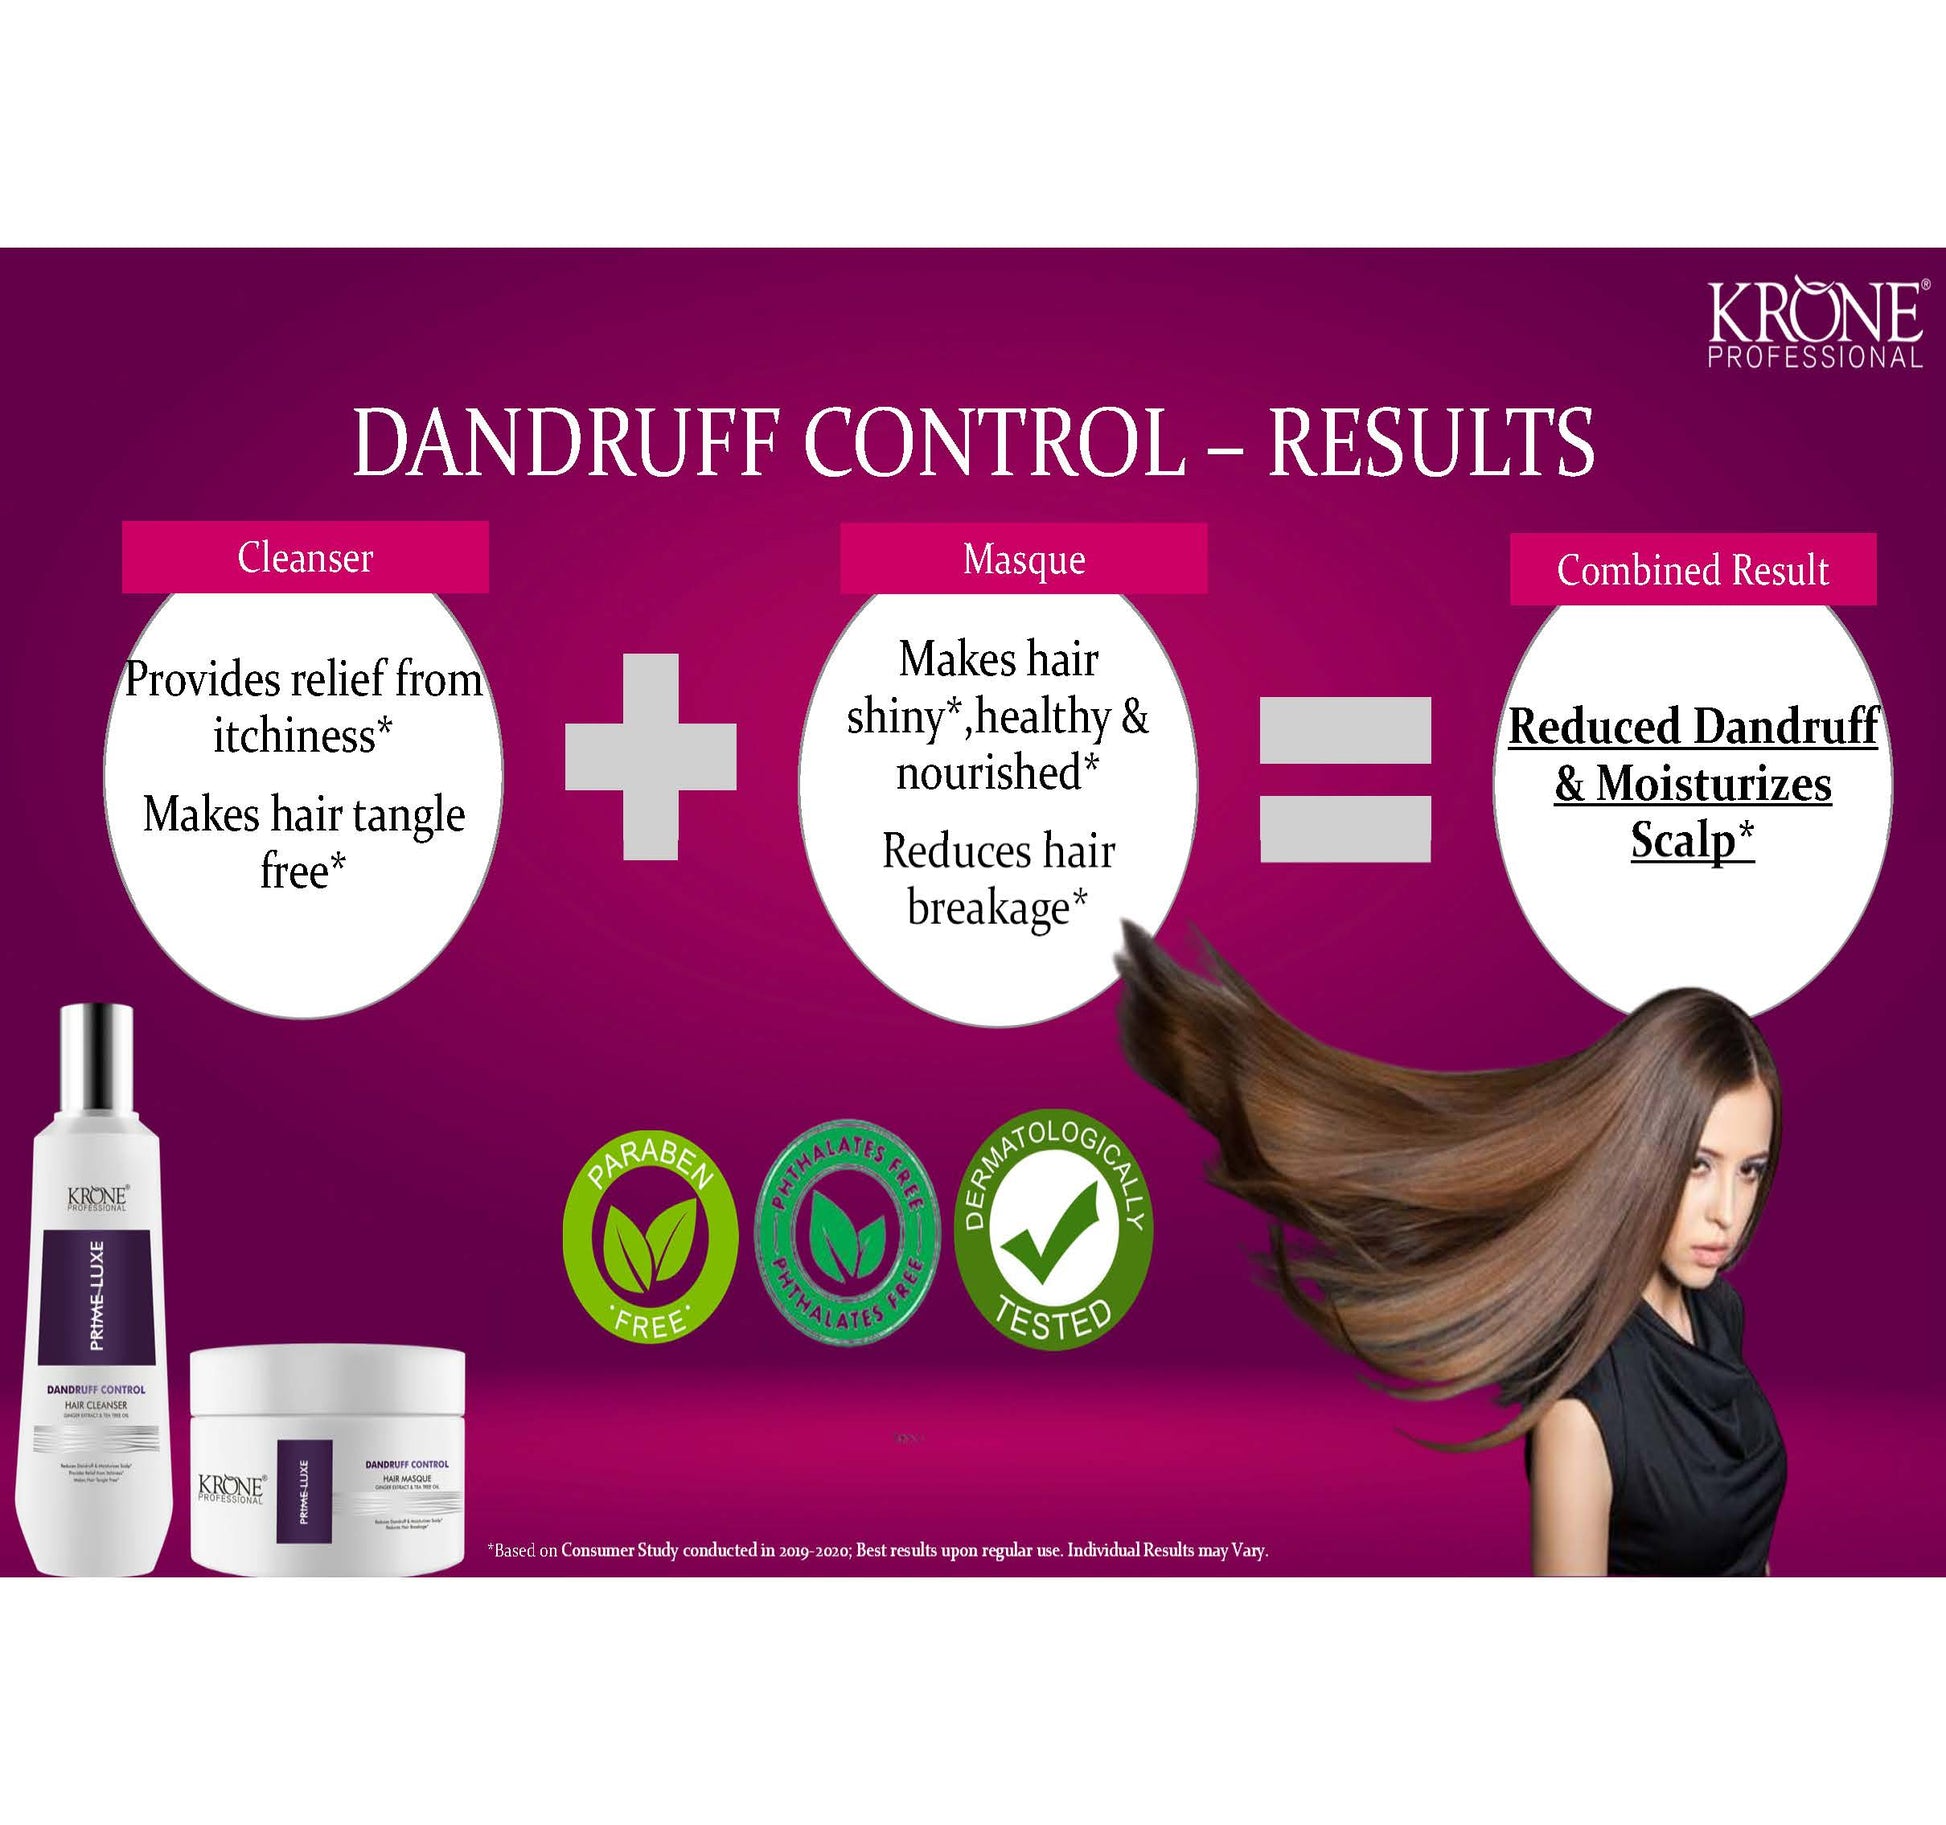 Krone Professional Dandruff Control Kit